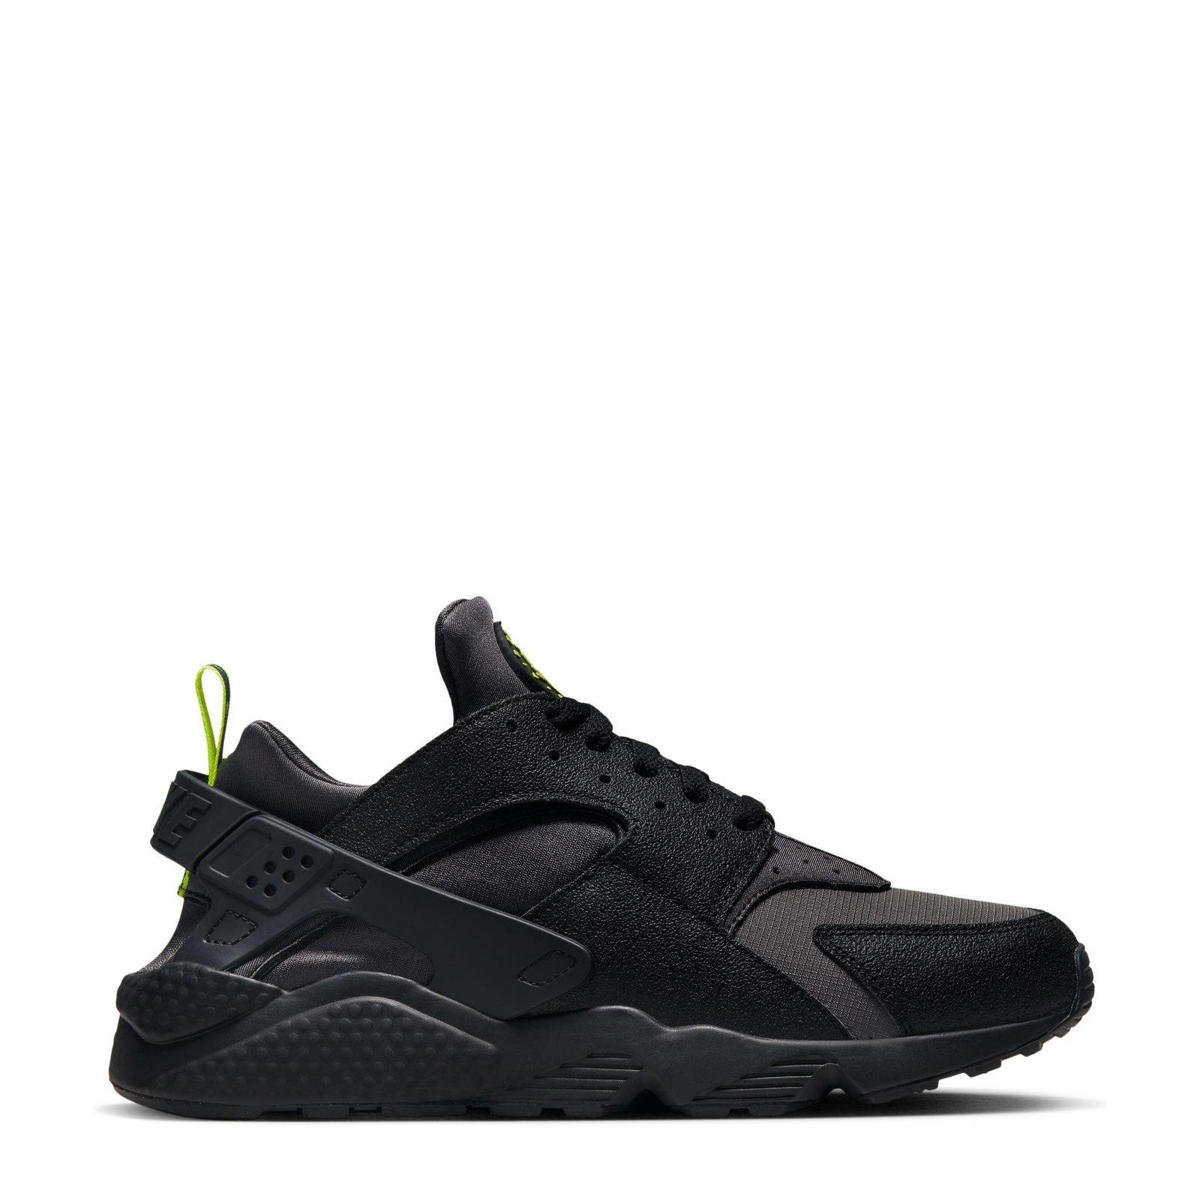 repetitie Kwaadaardige tumor Arbitrage Nike Air Huarache Run Ultra sneakers zwart/grijs | wehkamp